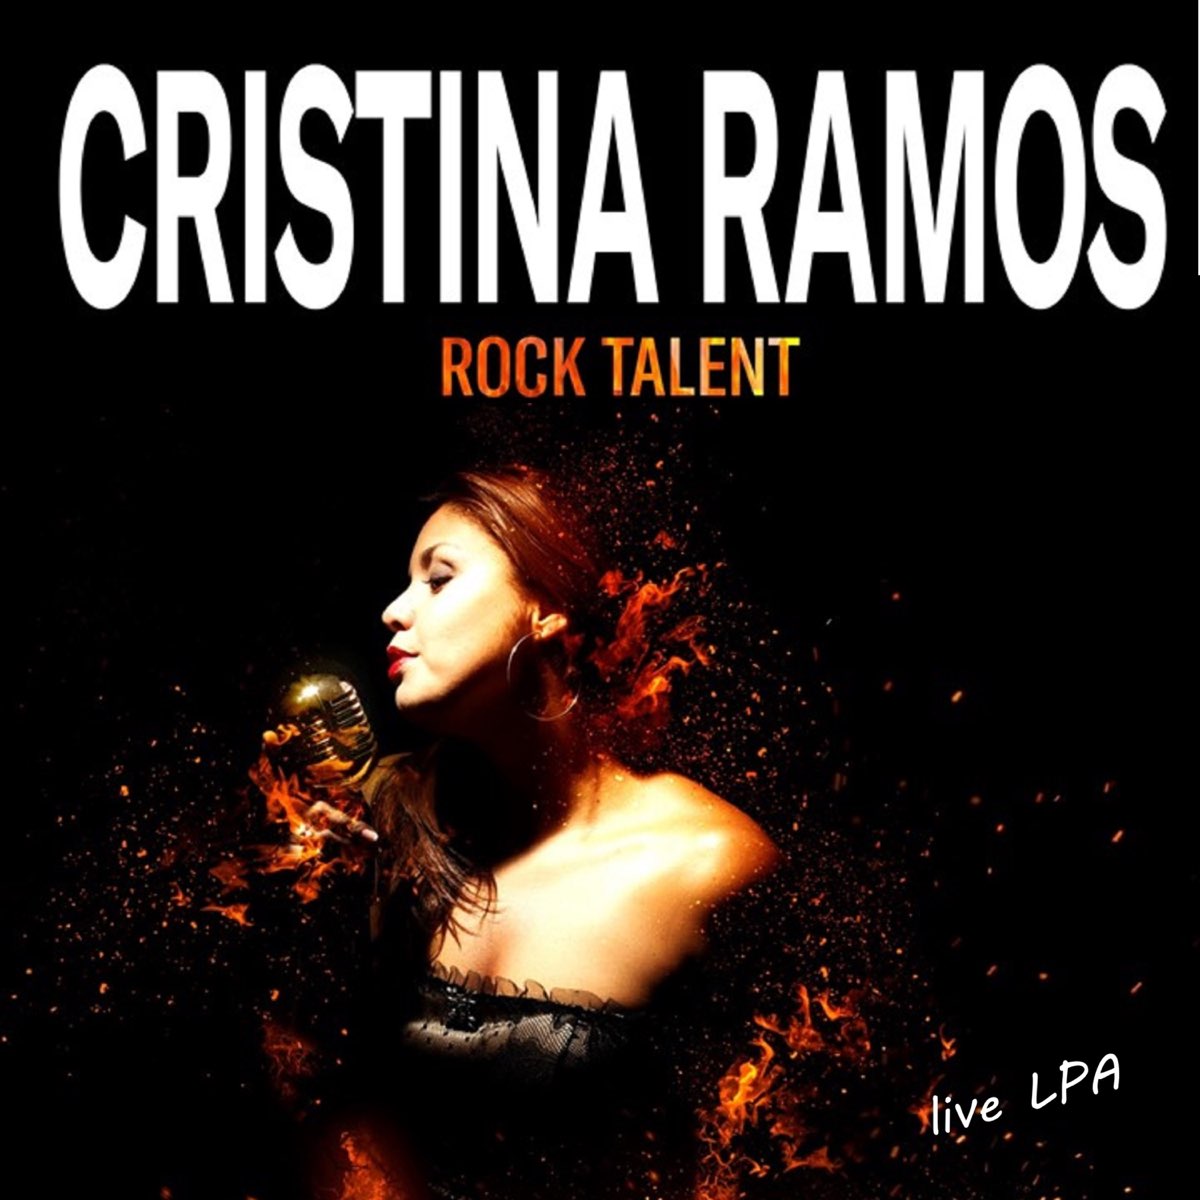 Rock Talent (Live LPA) - EP de Cristina Ramos en Apple Music